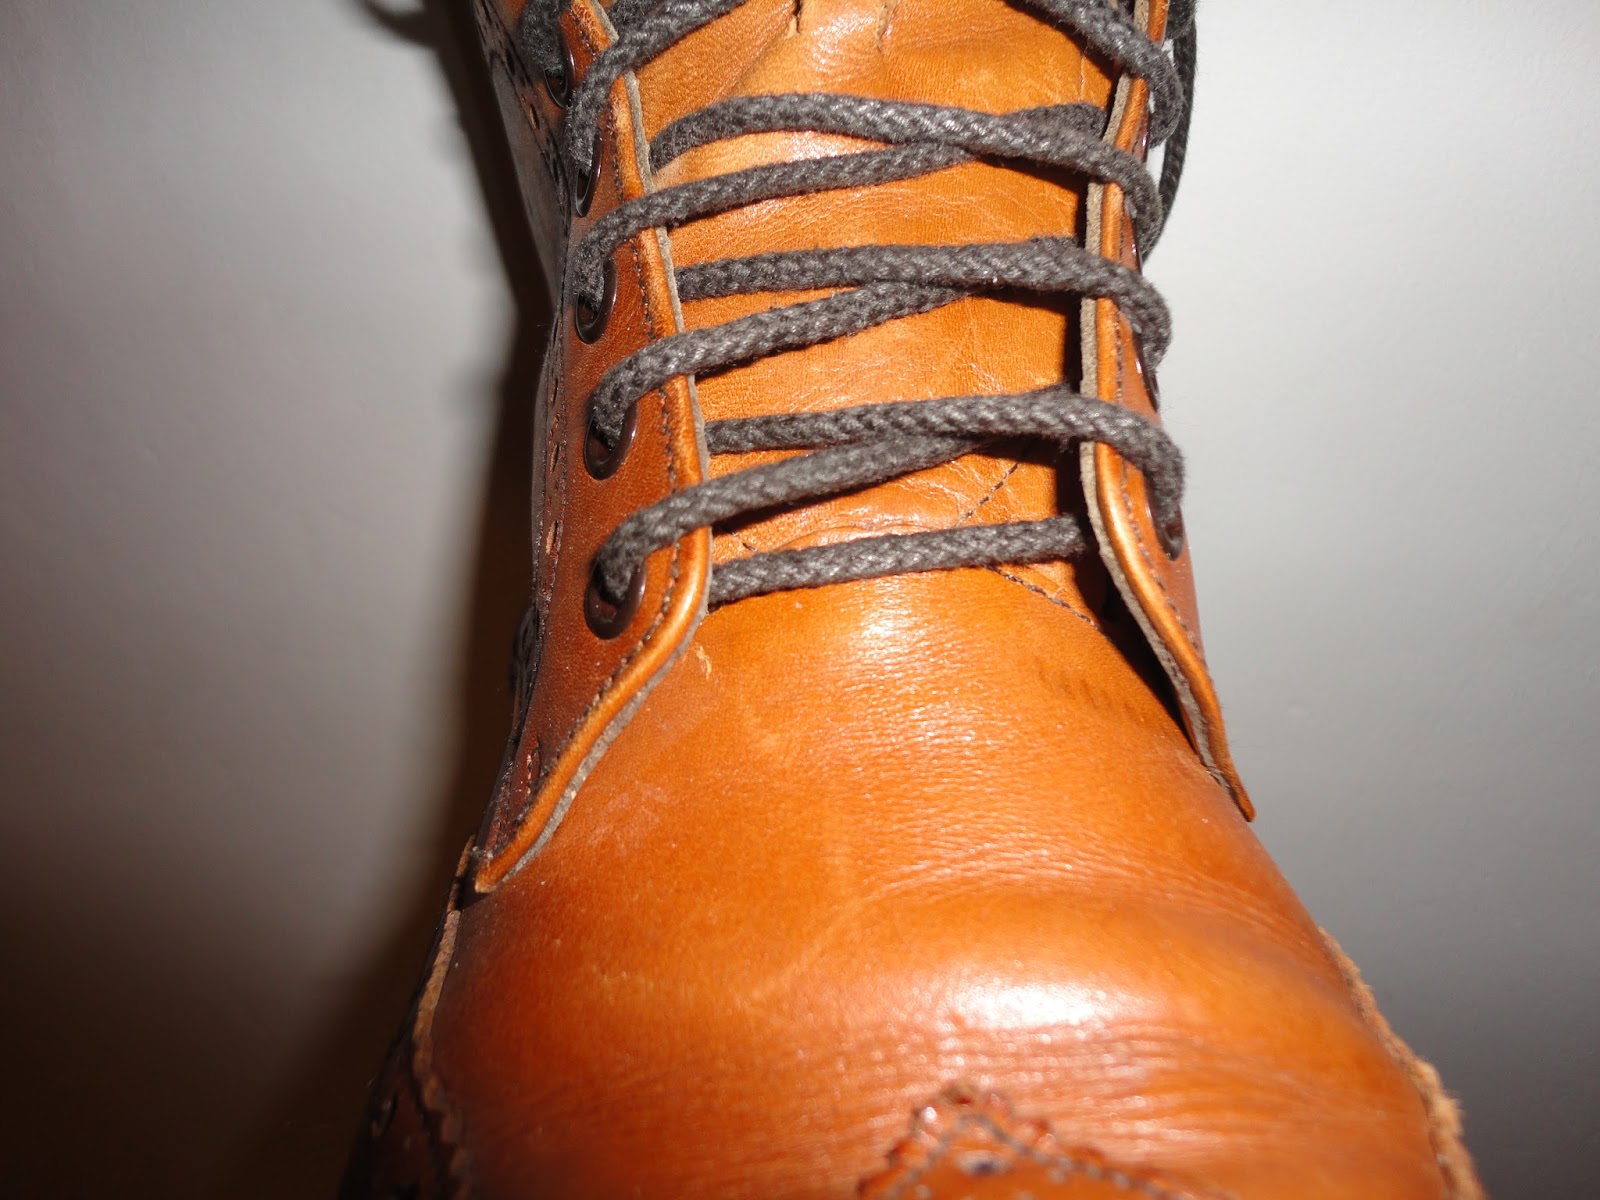 Roj - Fashion & Lifestyle: How To Thread Shoe / Boot Laces